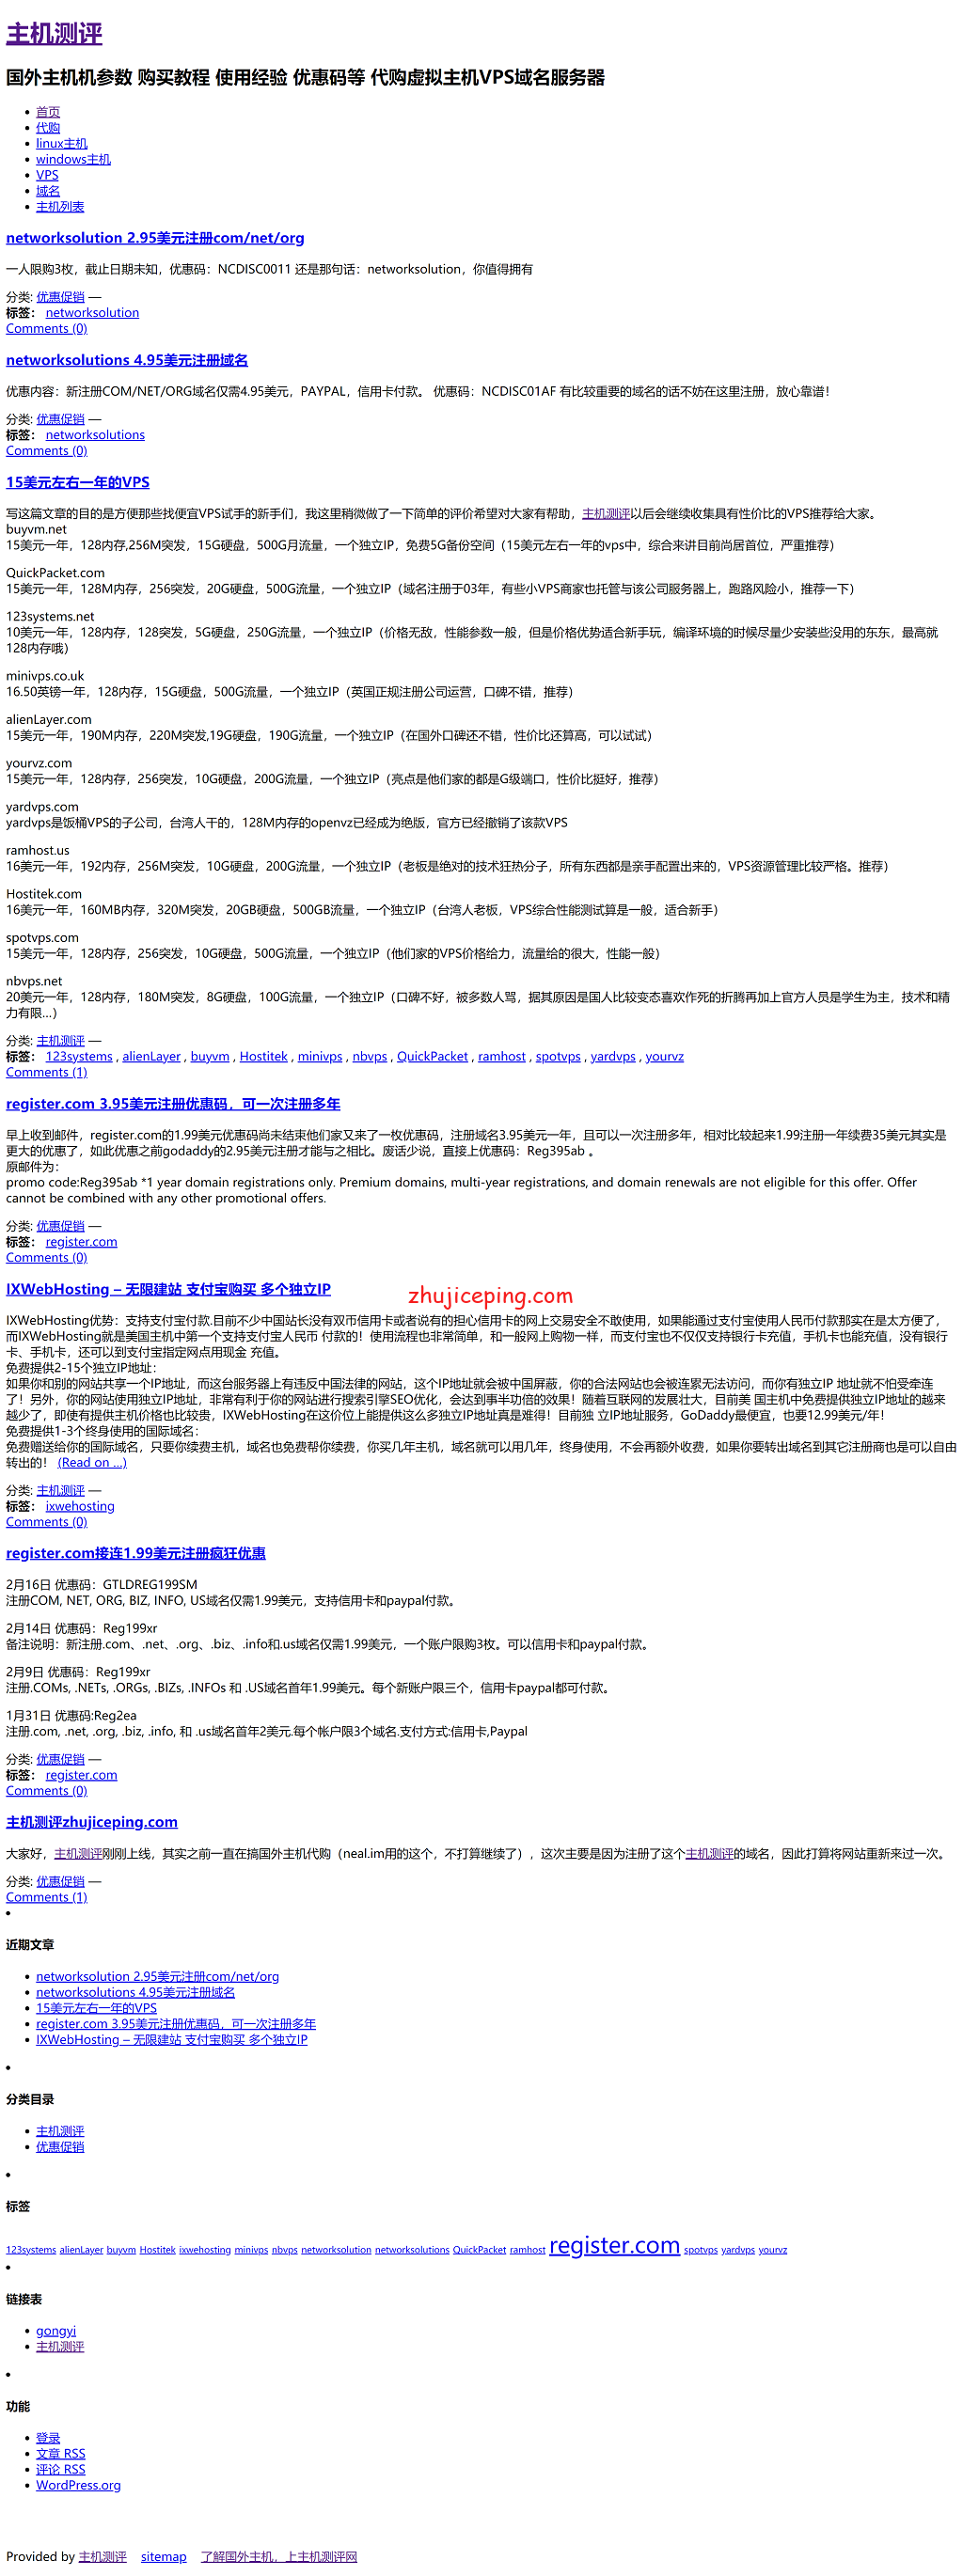 zhujiceing.com , archive.org/web/-国外主机测评